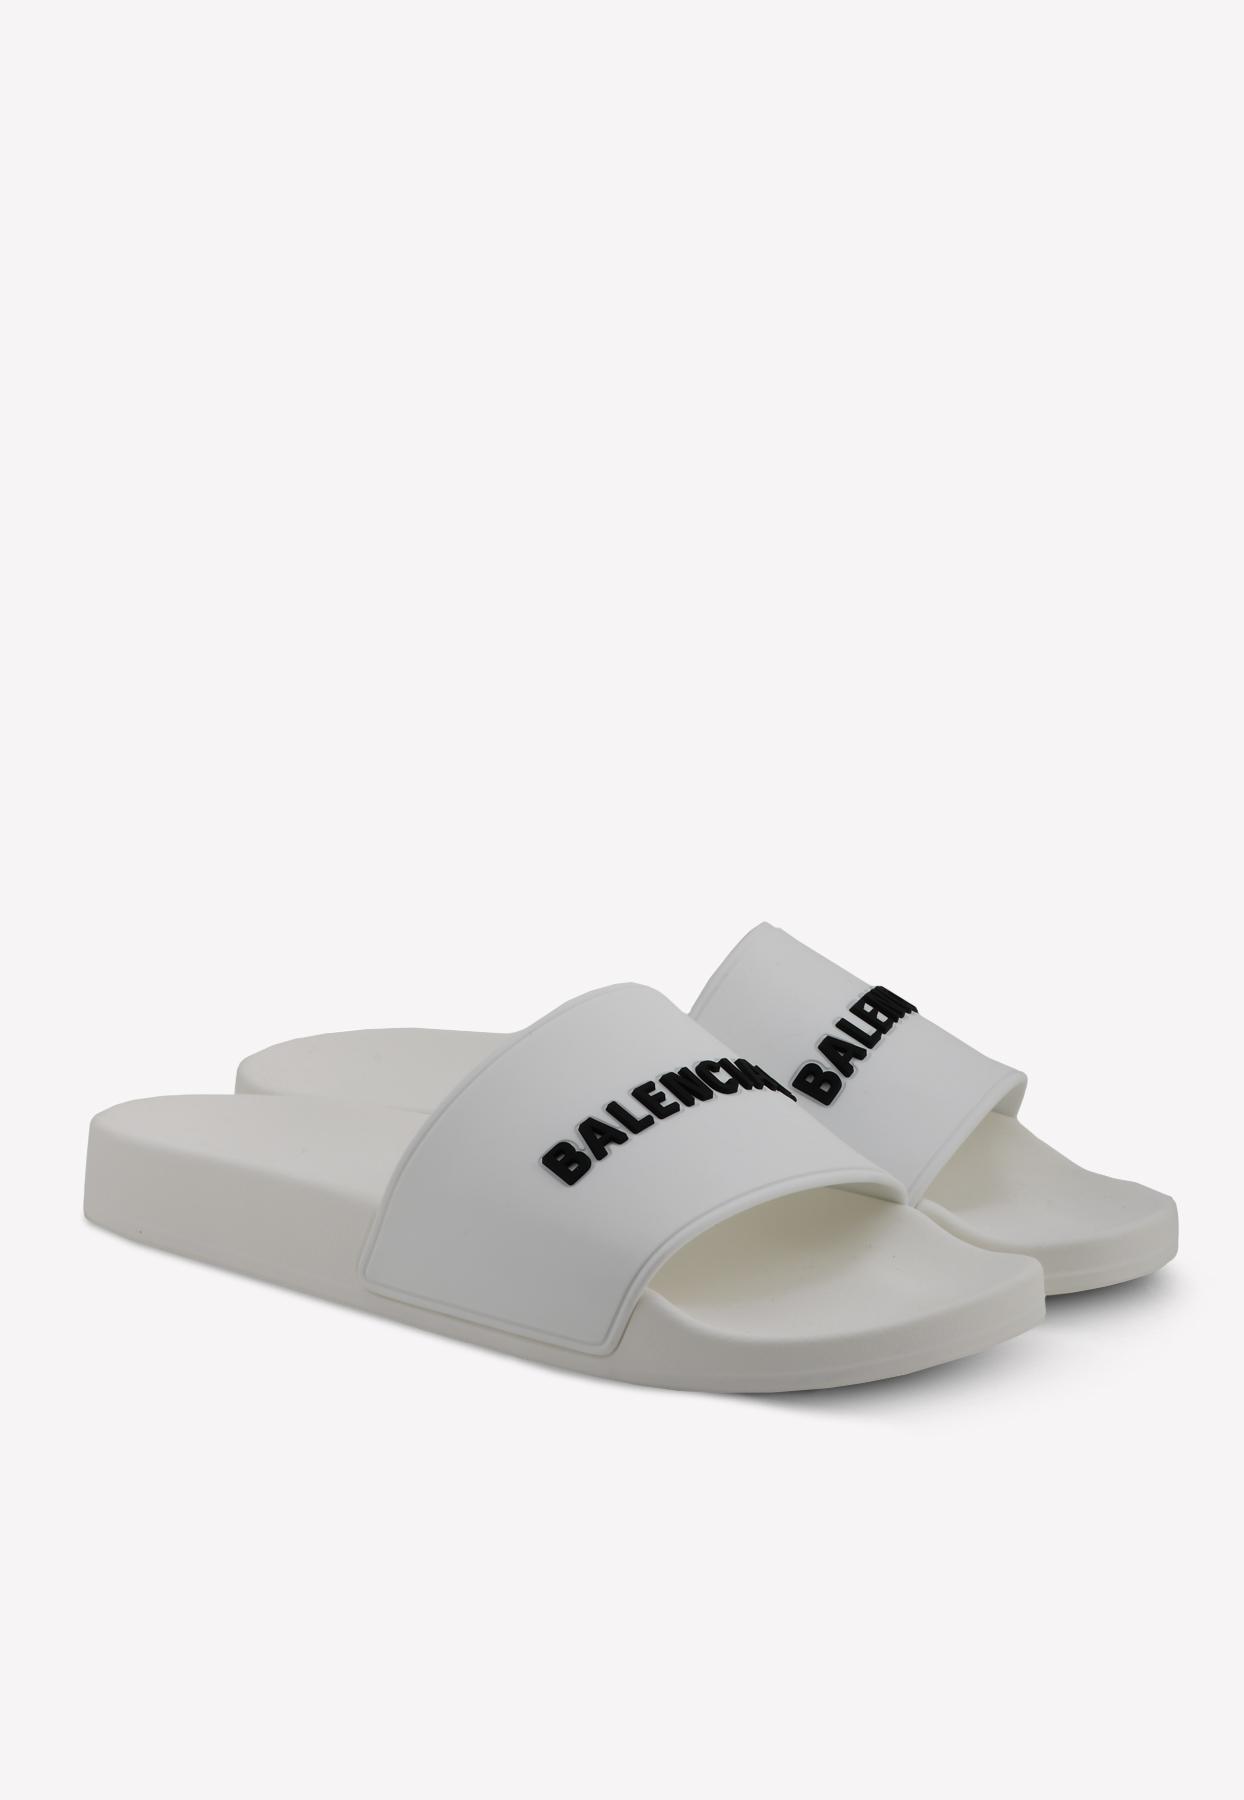 Balenciaga Logo Slides in White for Men - Save 28% - Lyst